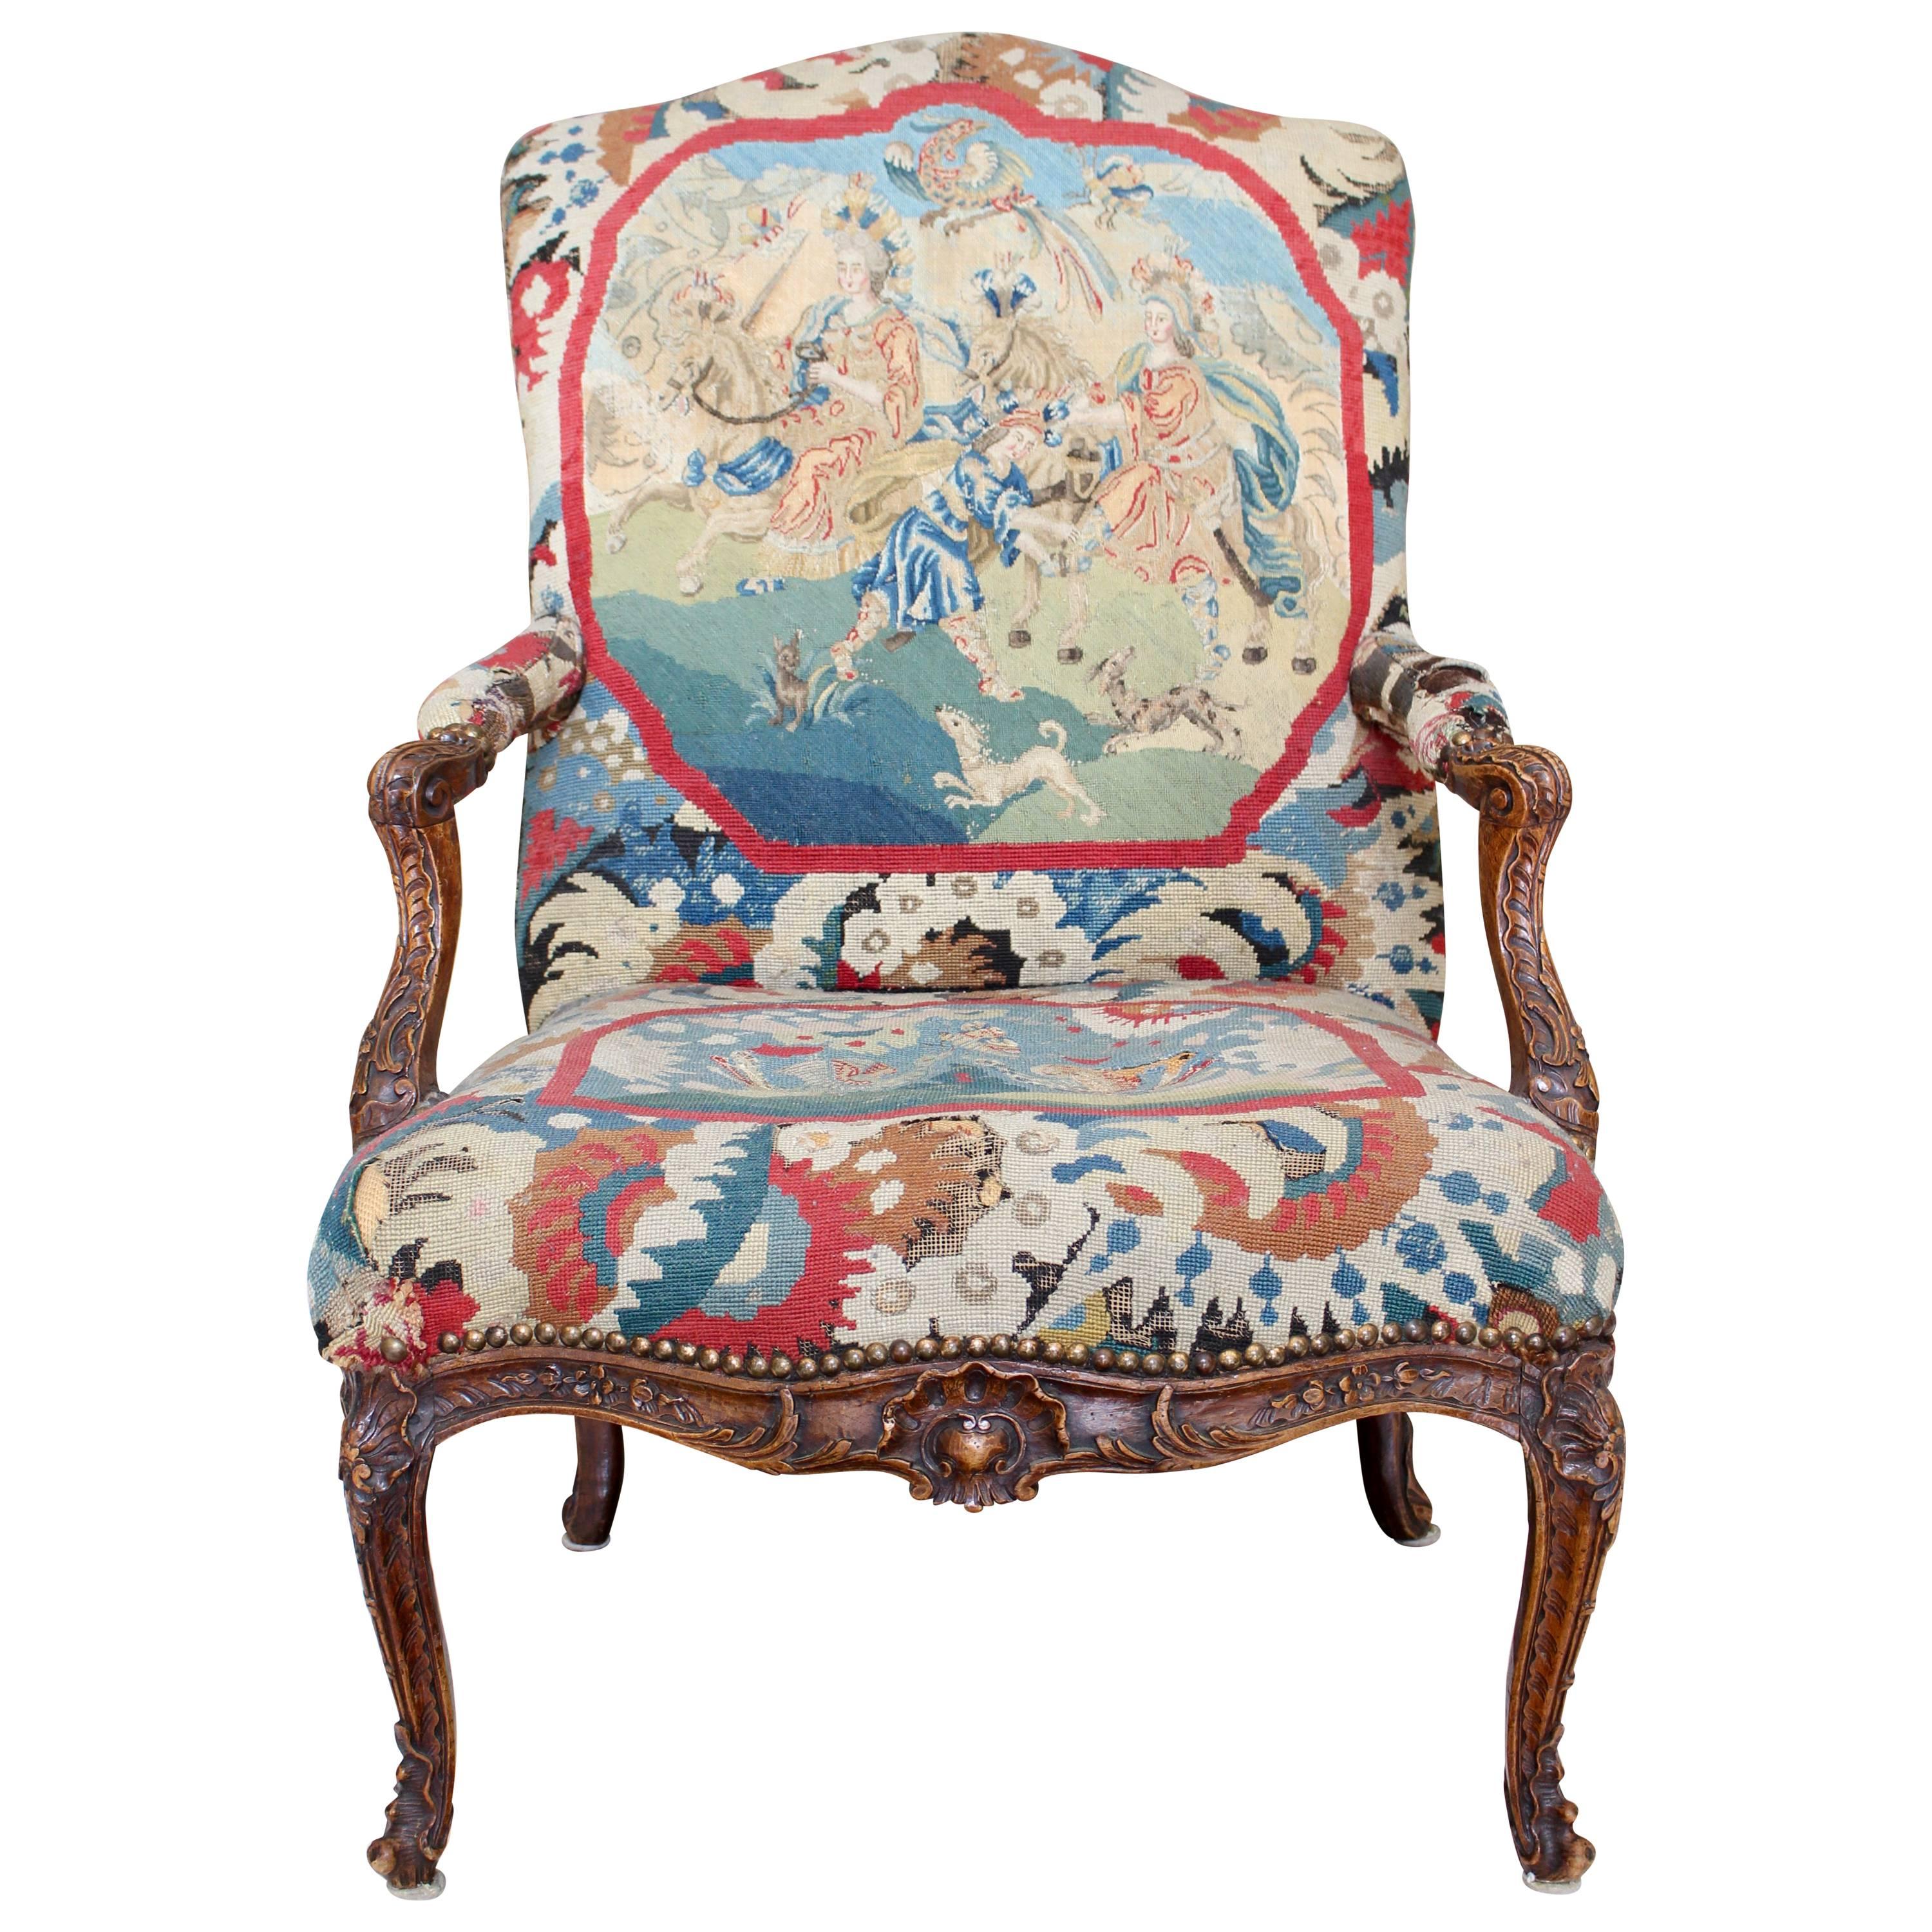 Elegant Regence Needlework-Upholstered French Walnut Fauteuil Chair